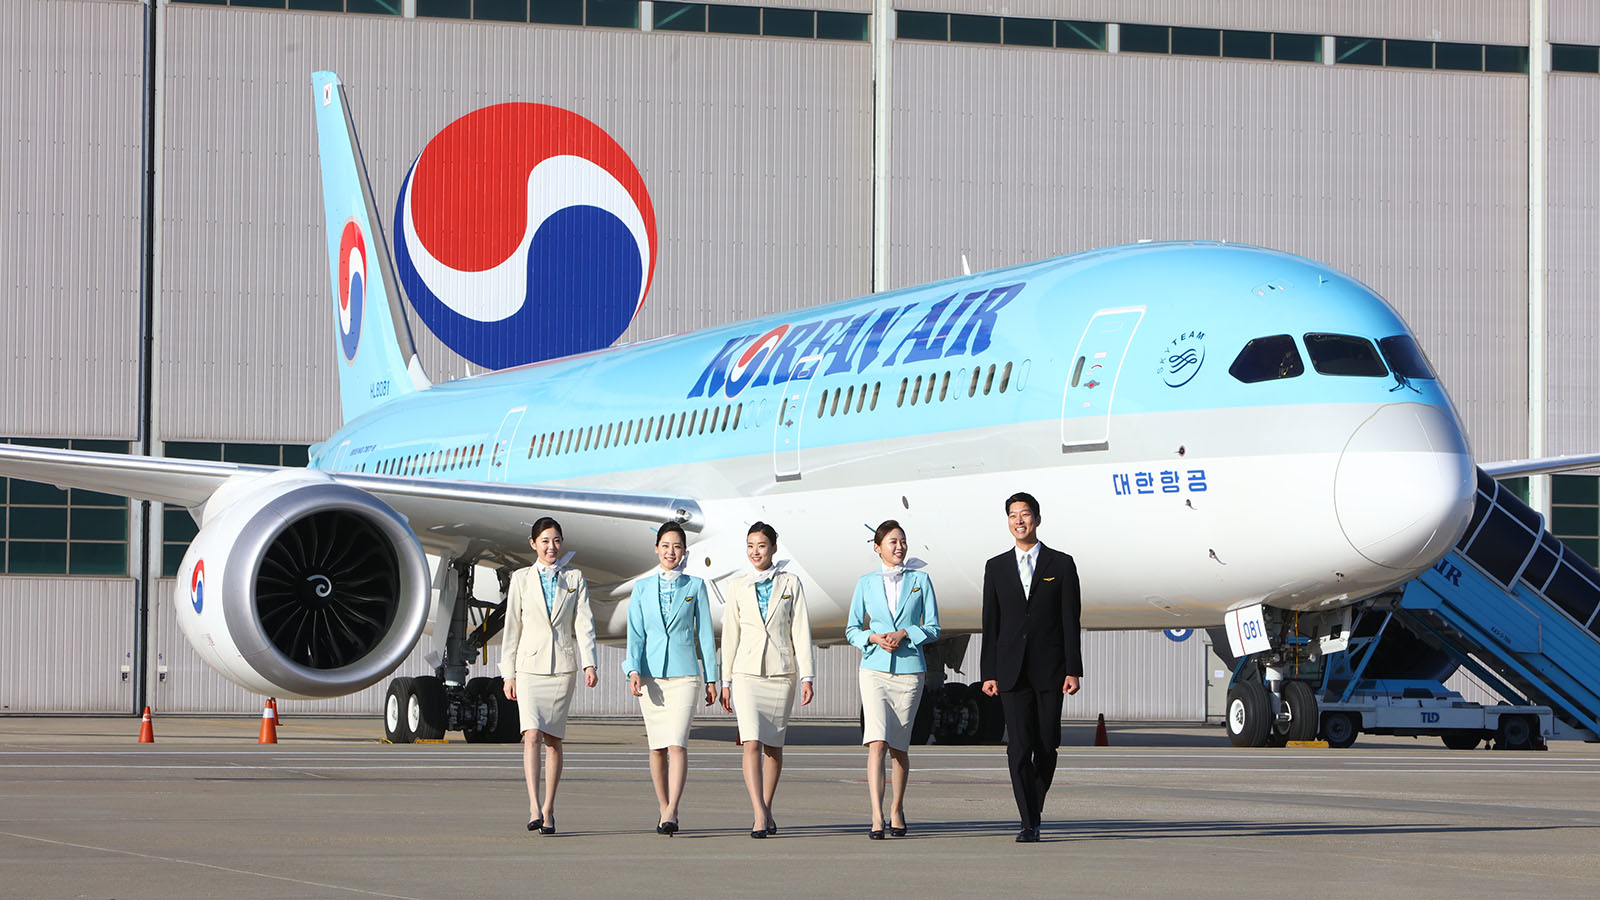 SkyTeam member Korean Air will be a new Virgin Atlantic partner